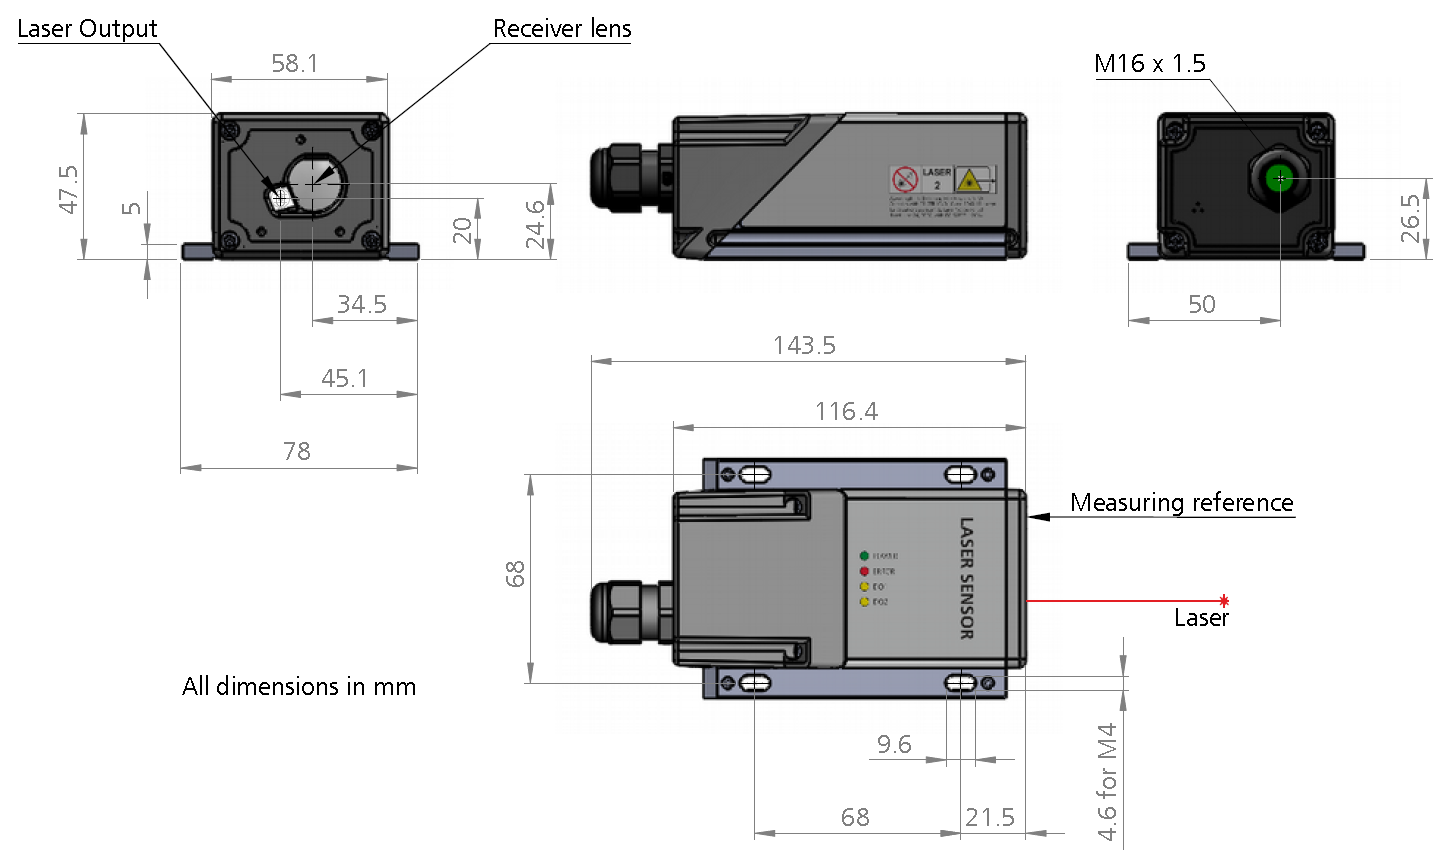 Dimetix laser sensor,DPE-10-500, DEN-10-500, DPE-30-500, DAN-10-150